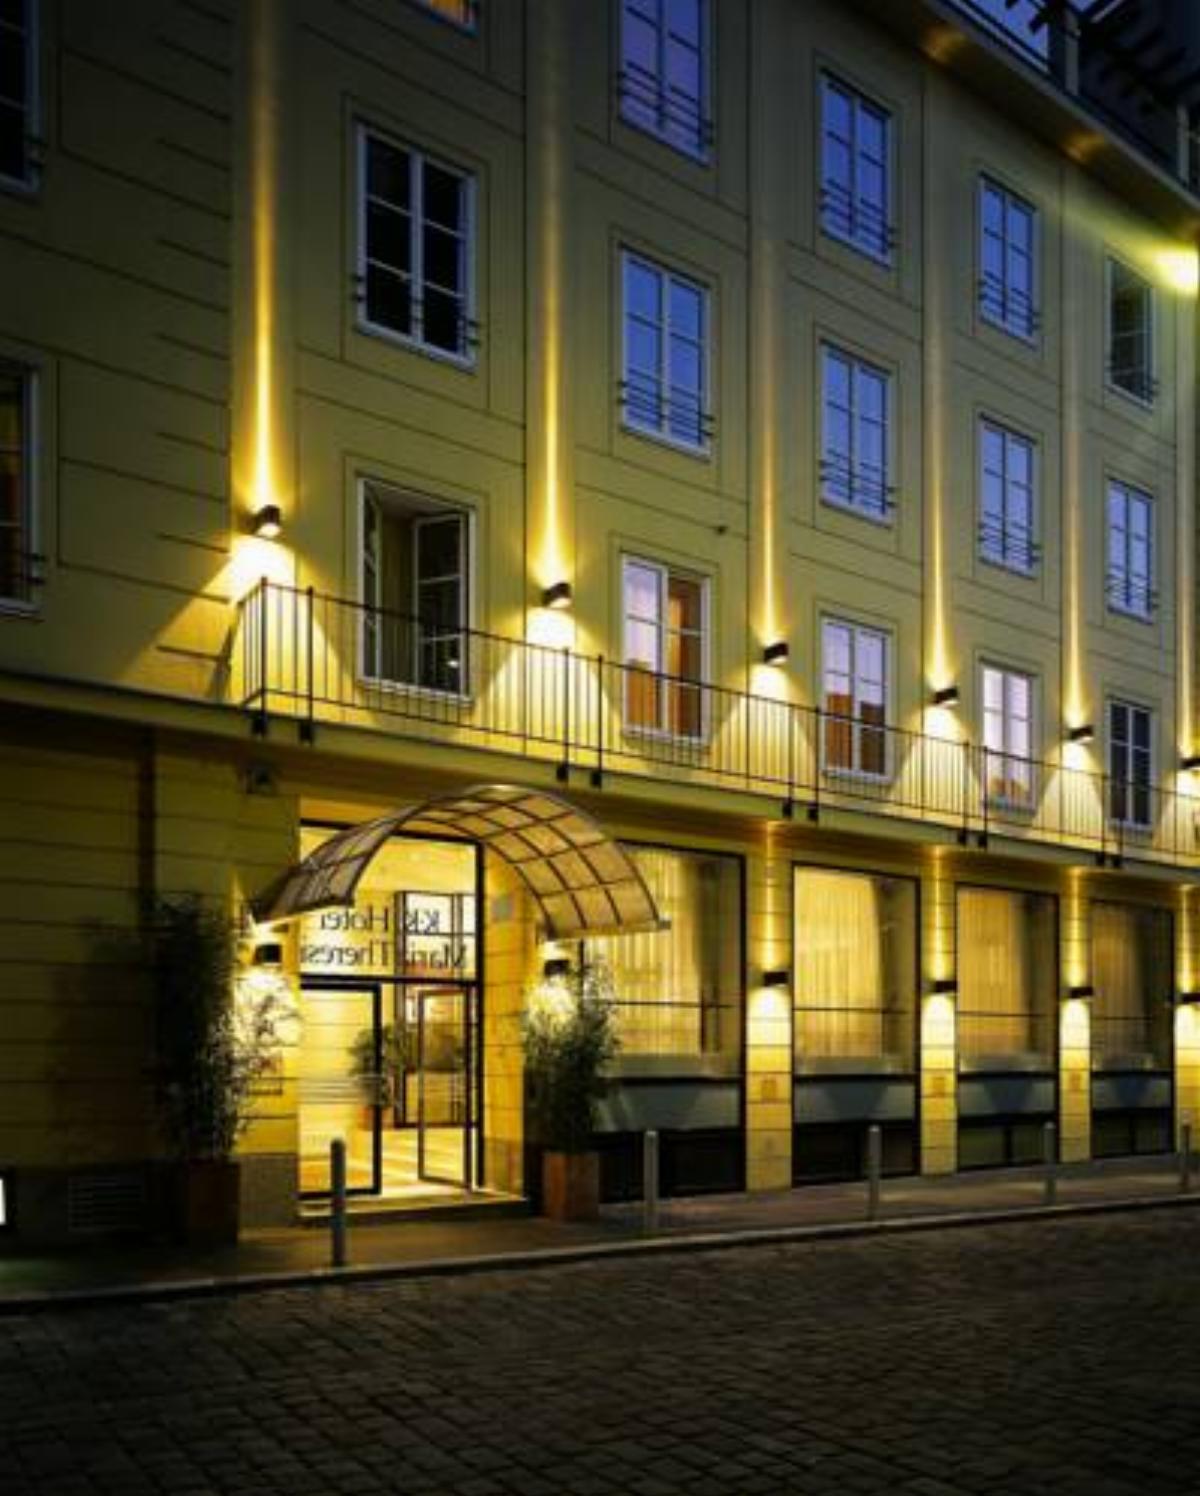 K+K Hotel Maria Theresia Hotel Wien Austria